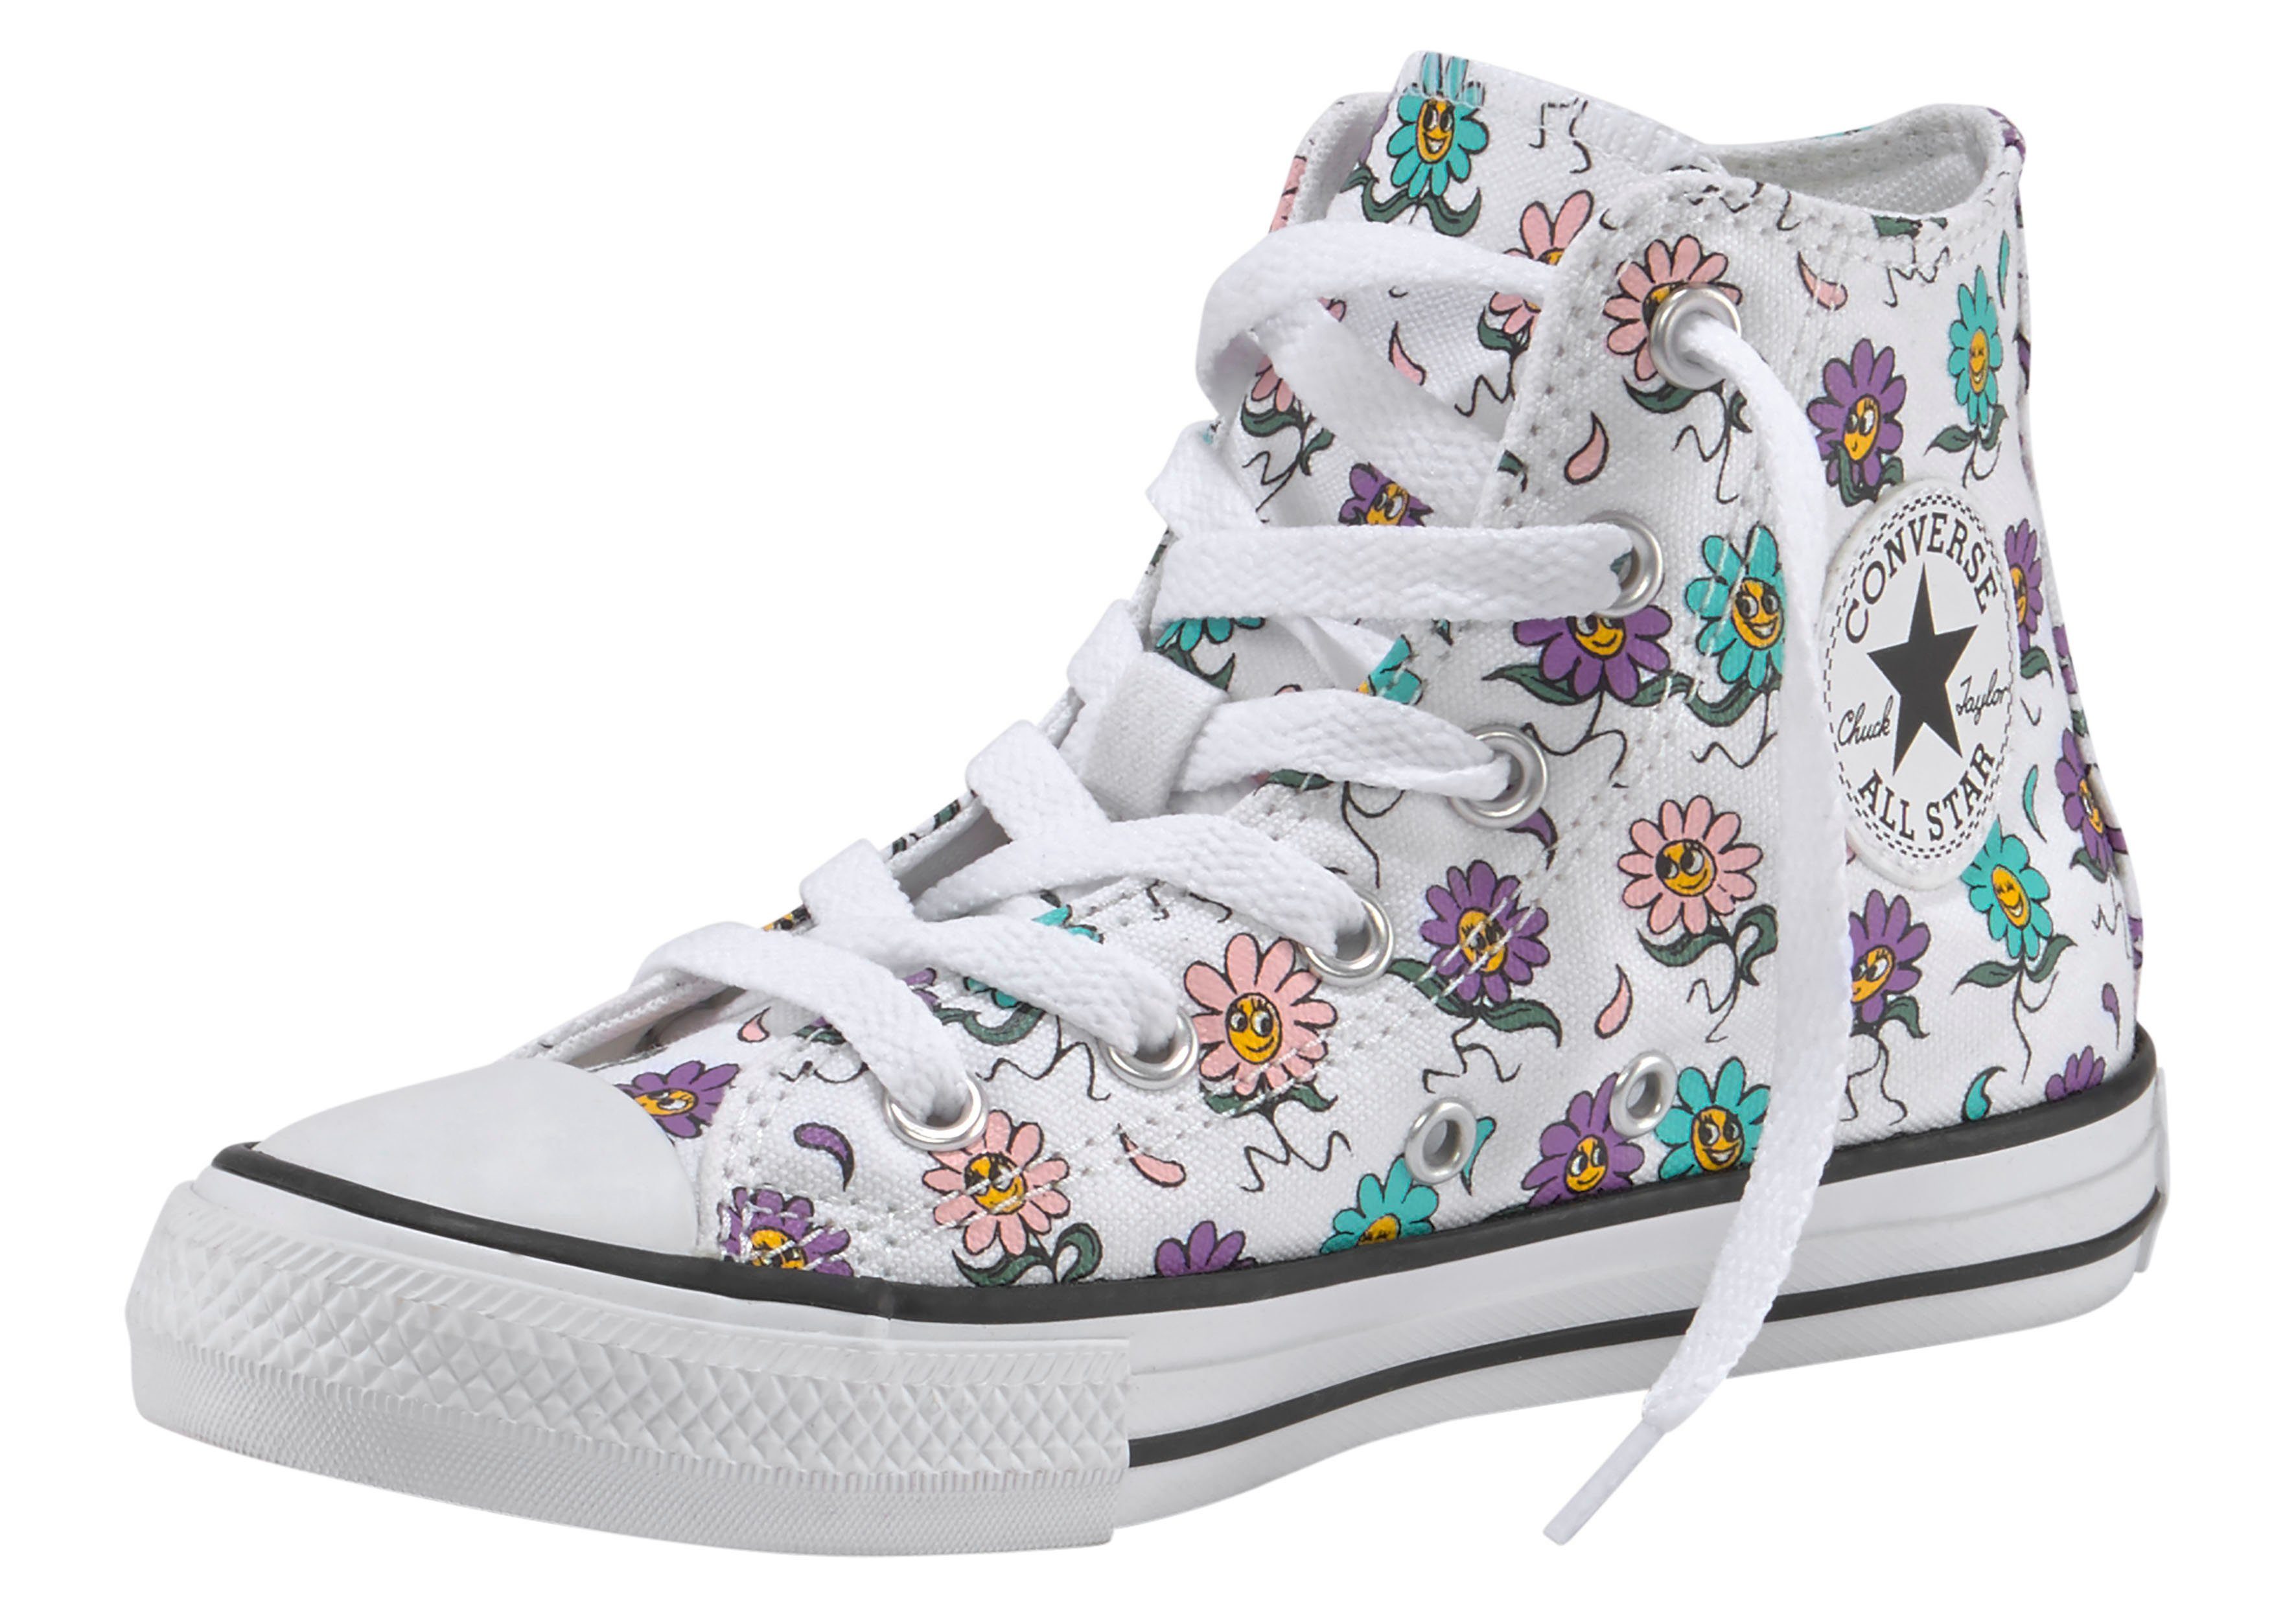 Converse »CHUCK TAYLOR ALL STAR-HI« Sneaker kaufen | OTTO